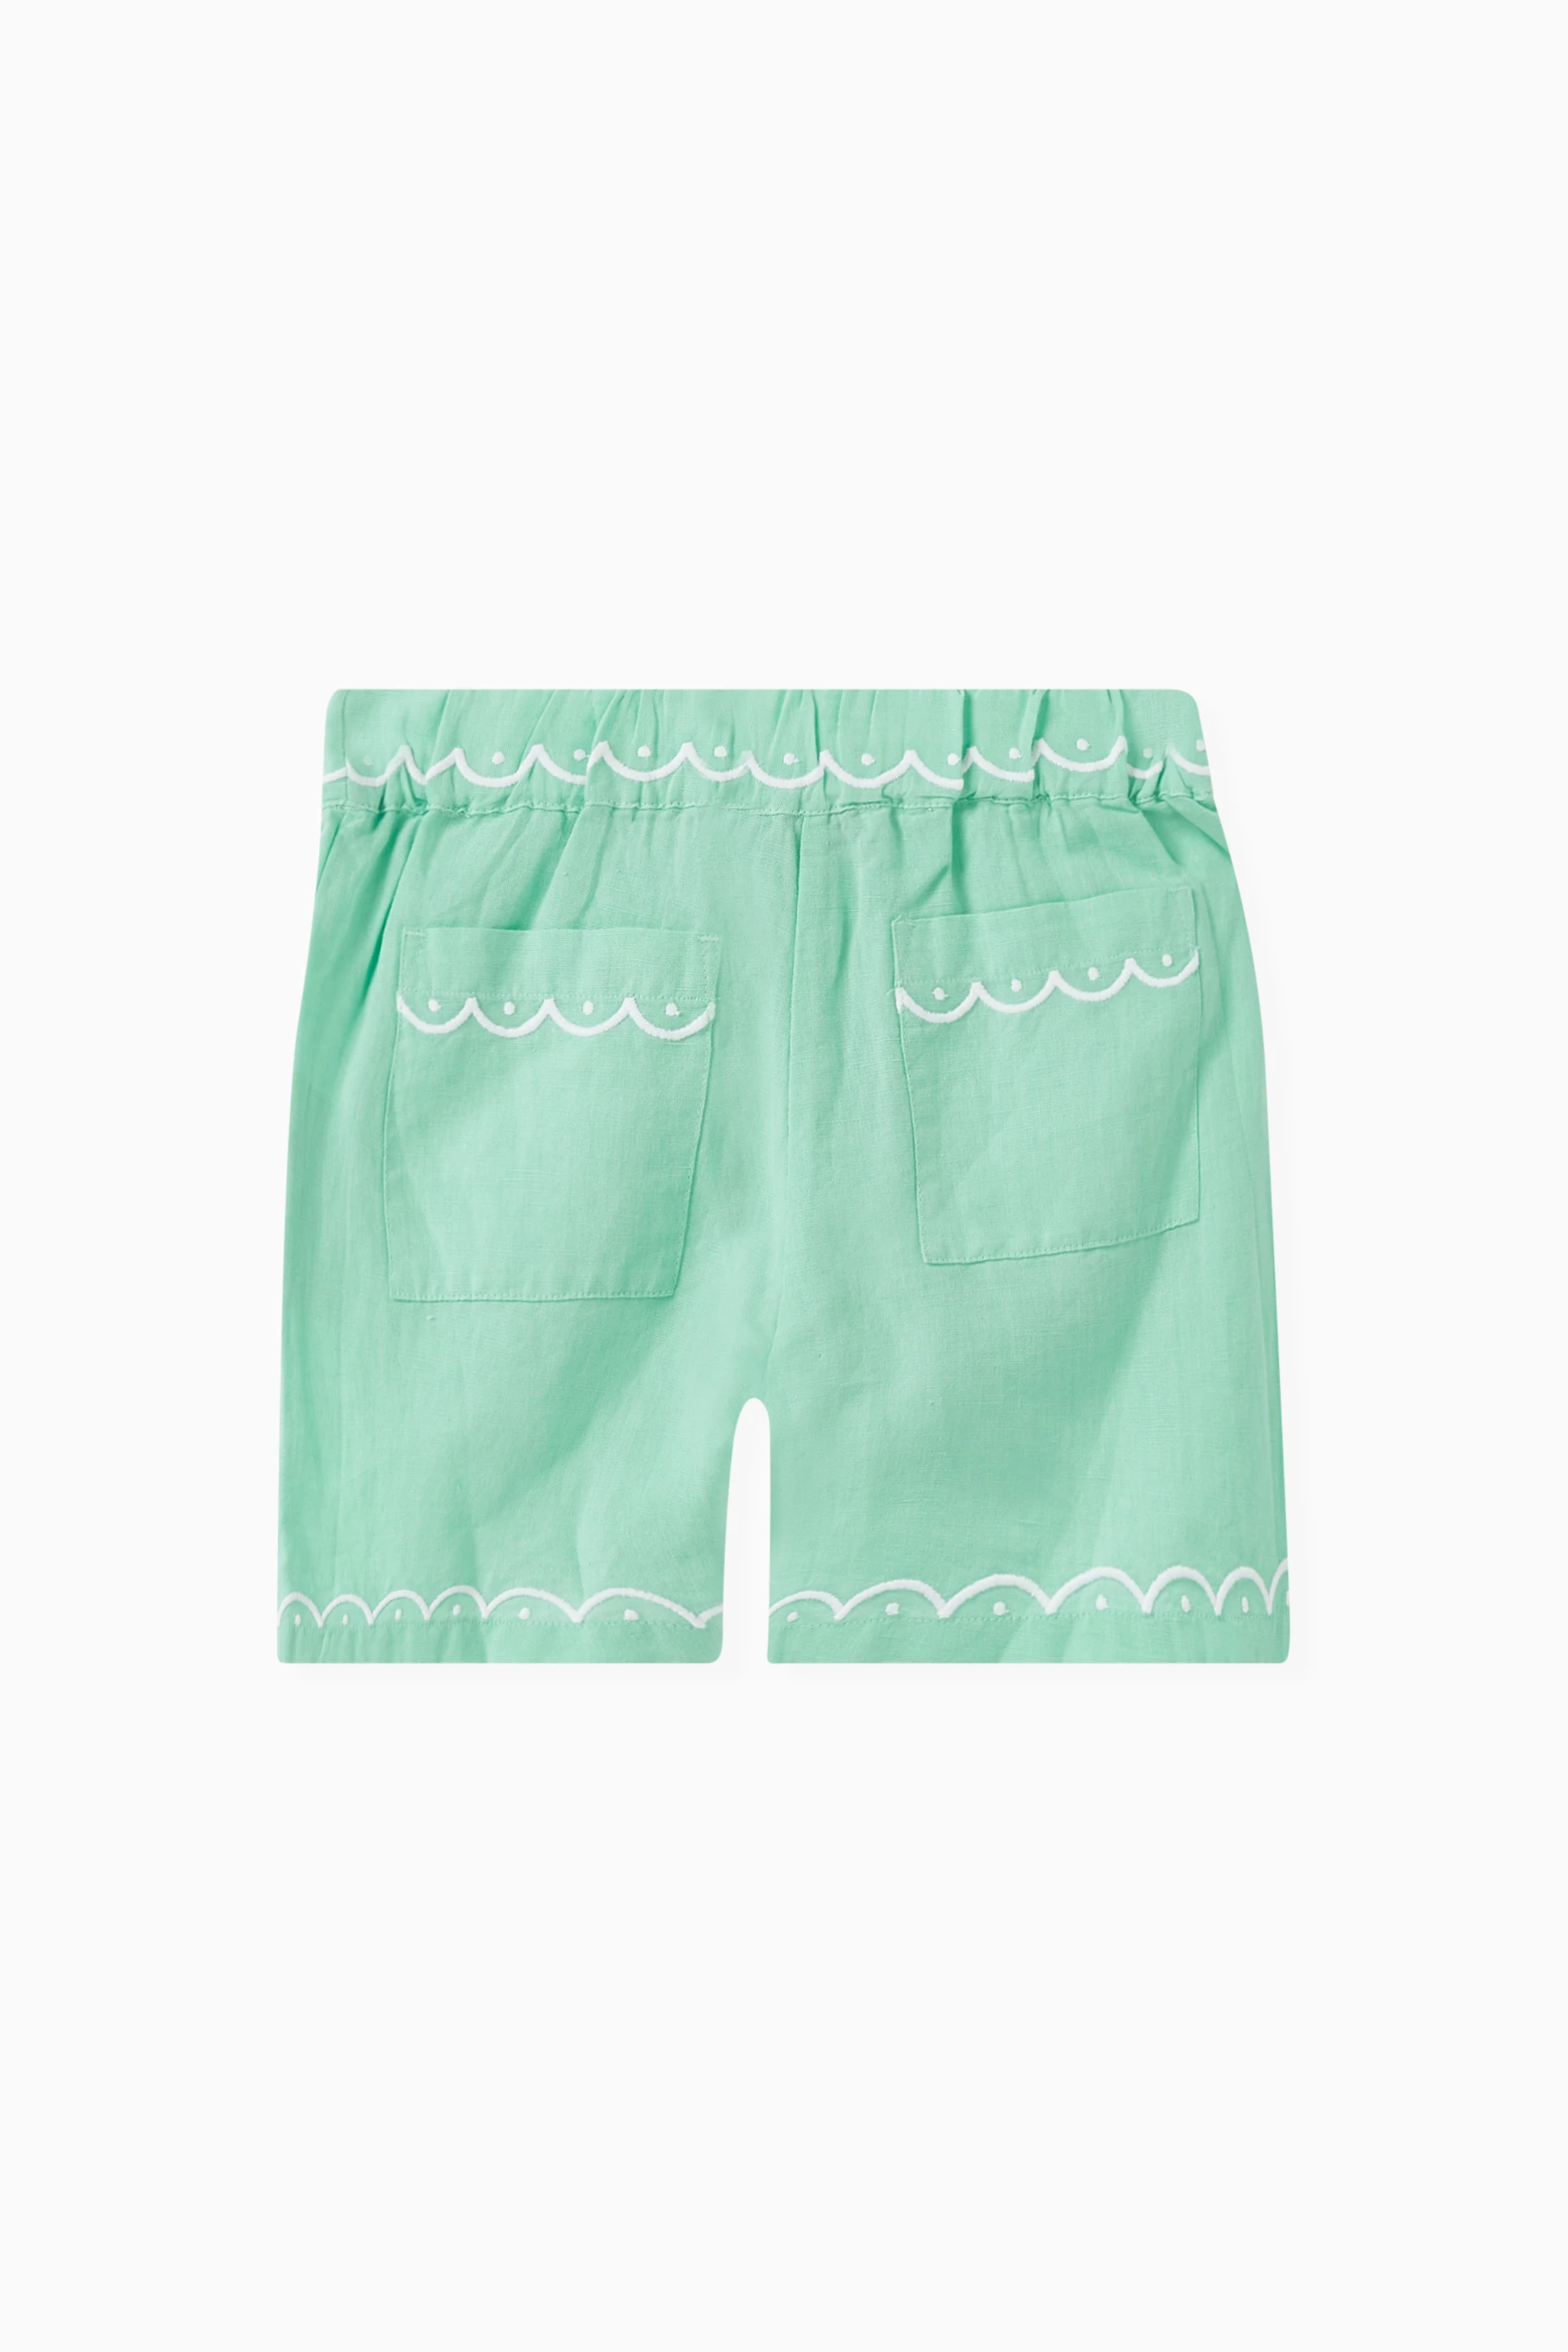 Stella McCartney Kids scallop-embroidered shorts - Green